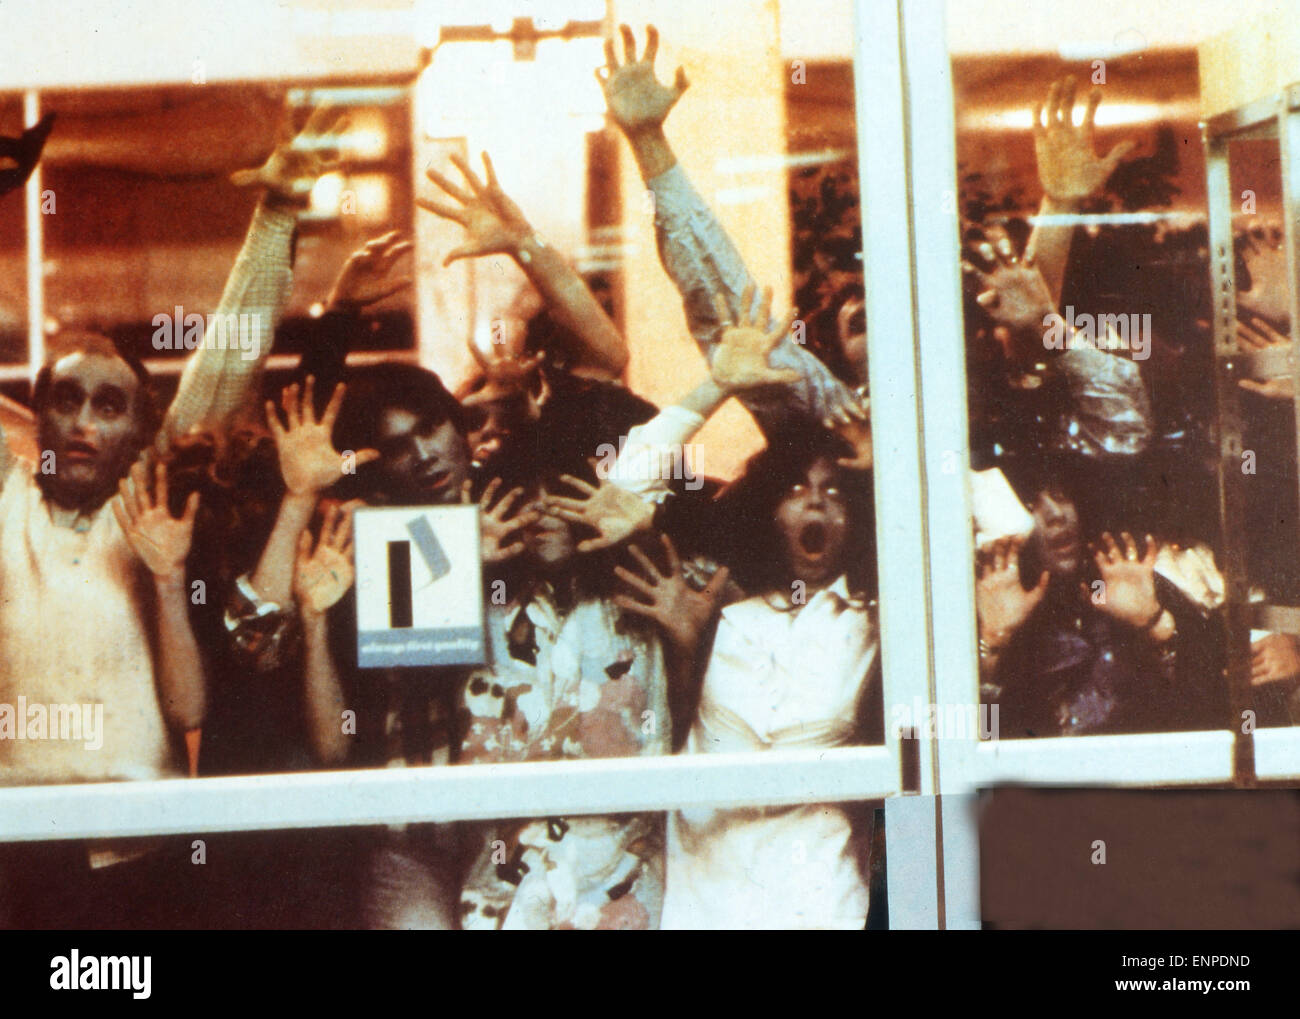 Dawn Of The Dead, aka: Zombie, Italien/USA 1977, Regie: George A. Romero, Szenenfoto Stock Photo